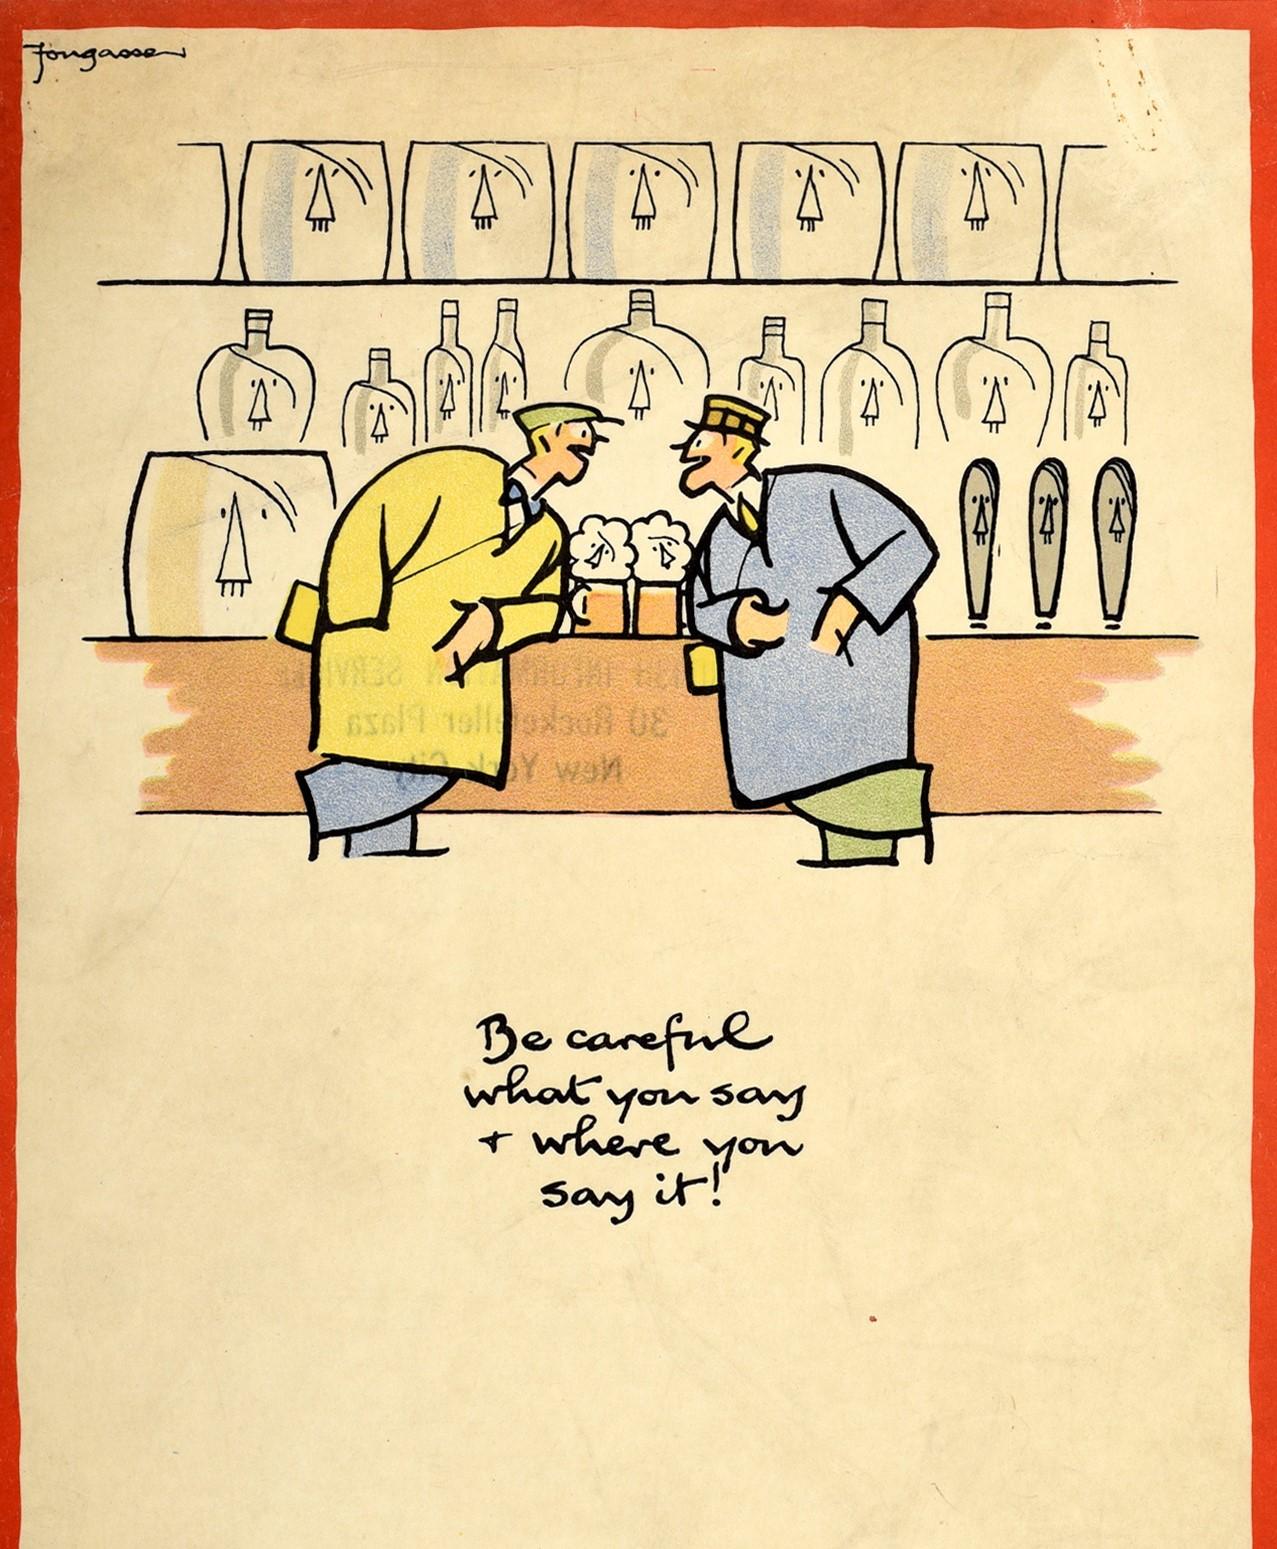 Original Vintage Poster Careless Talk Costs Lives WWII Pub Beer Design Warning - Print by Fougasse (Cyril Kenneth Bird)